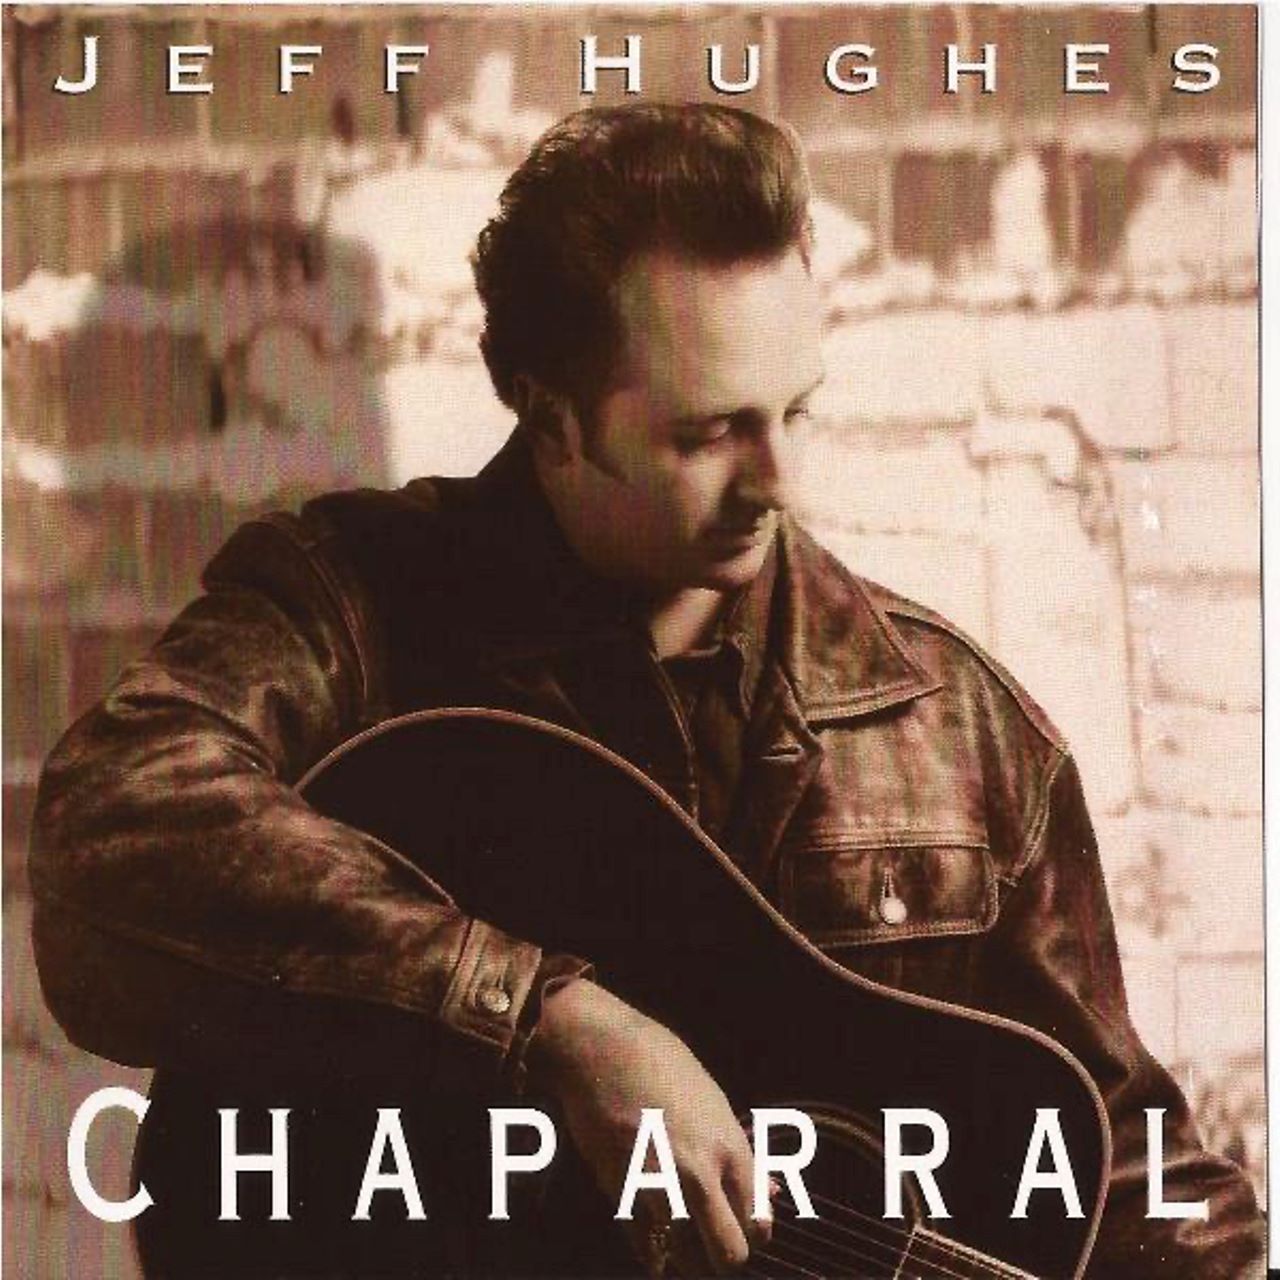 Jeff Hughes - Chaparral cover album